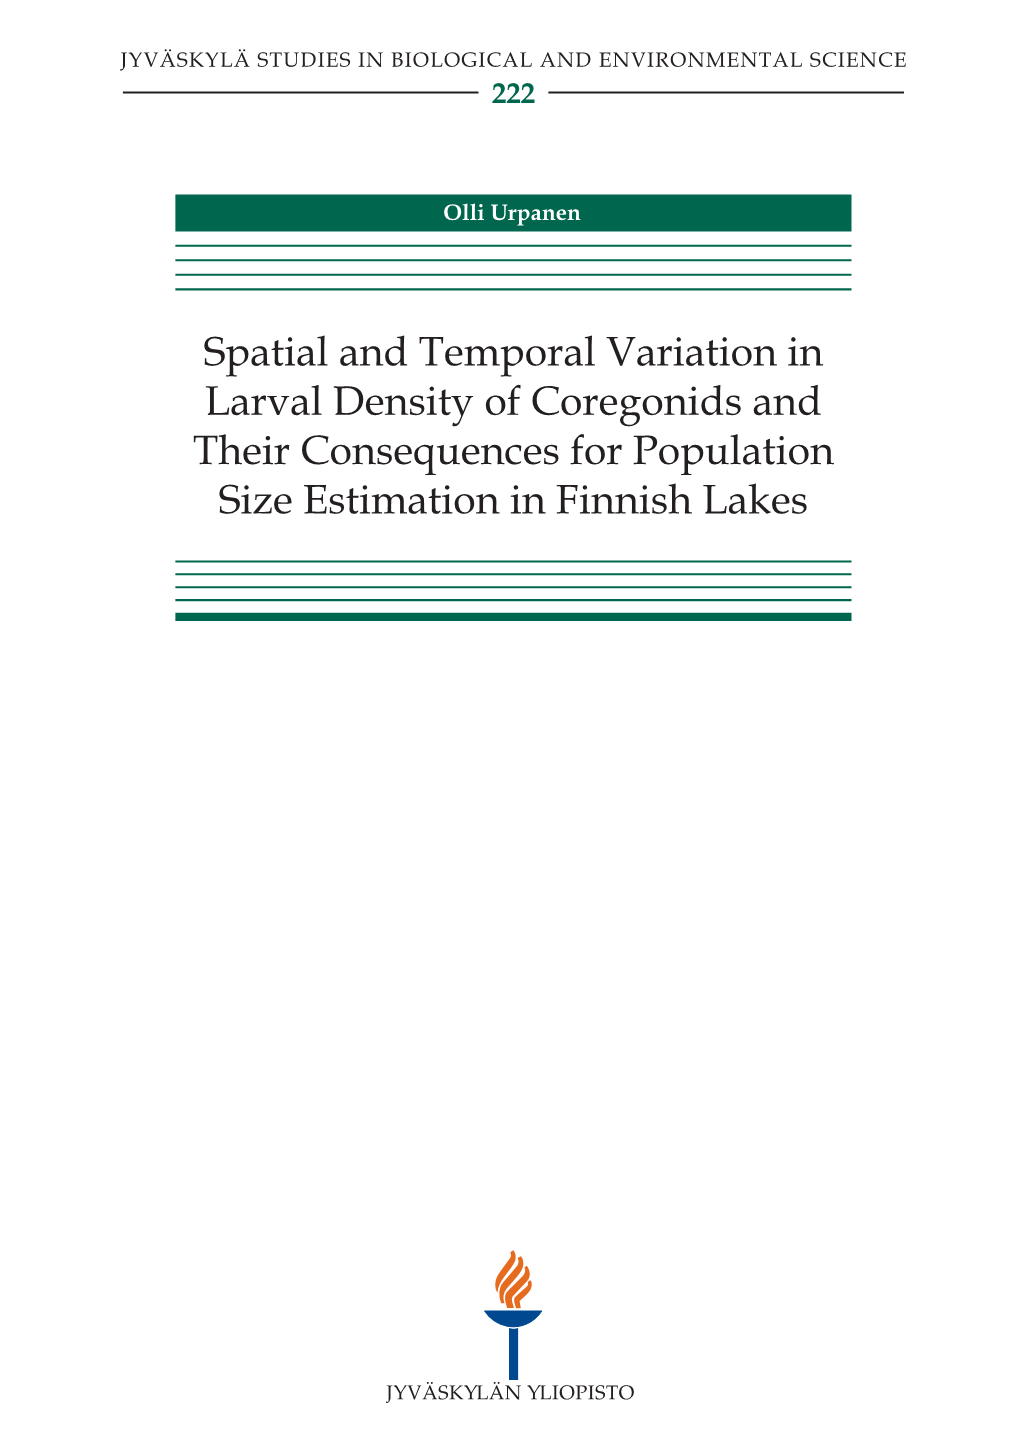 Spatial and Temporal Variation in Larval Density of Coregonids And